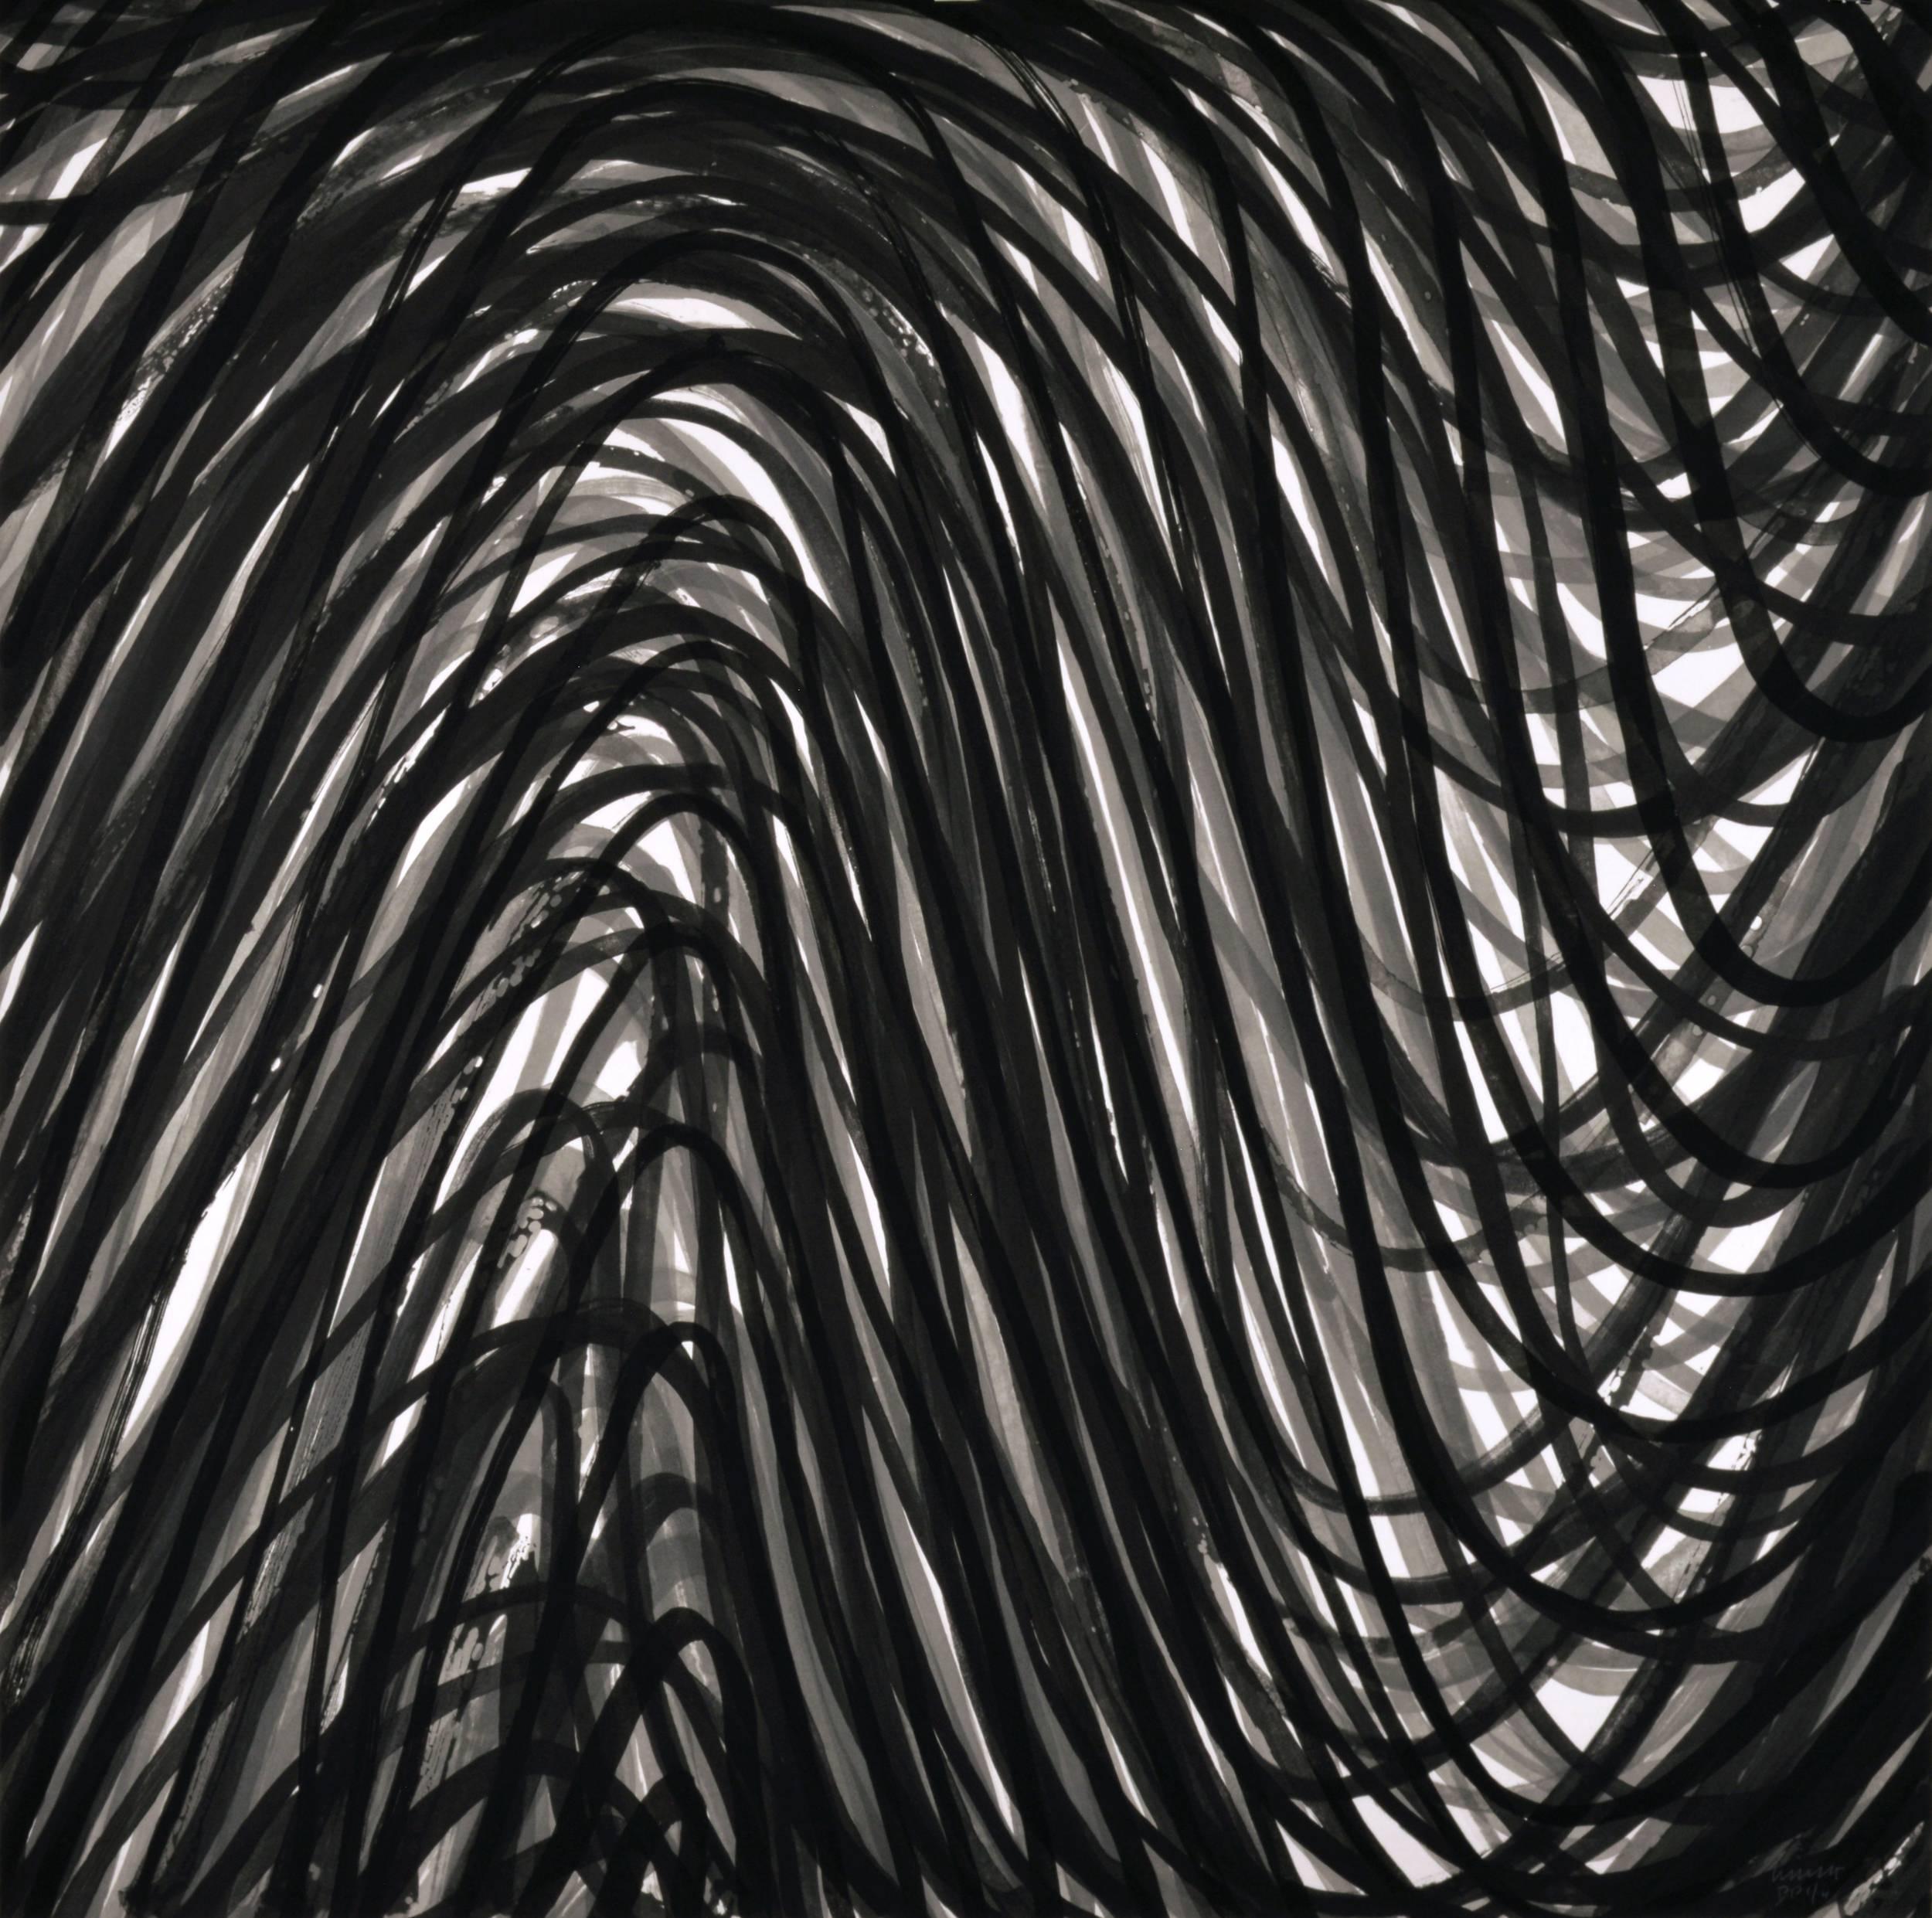 Sol LeWitt Abstract Print - Wavy Brushstrokes #2 (Black), aquatint, abstract, LeWitt, monochromatic